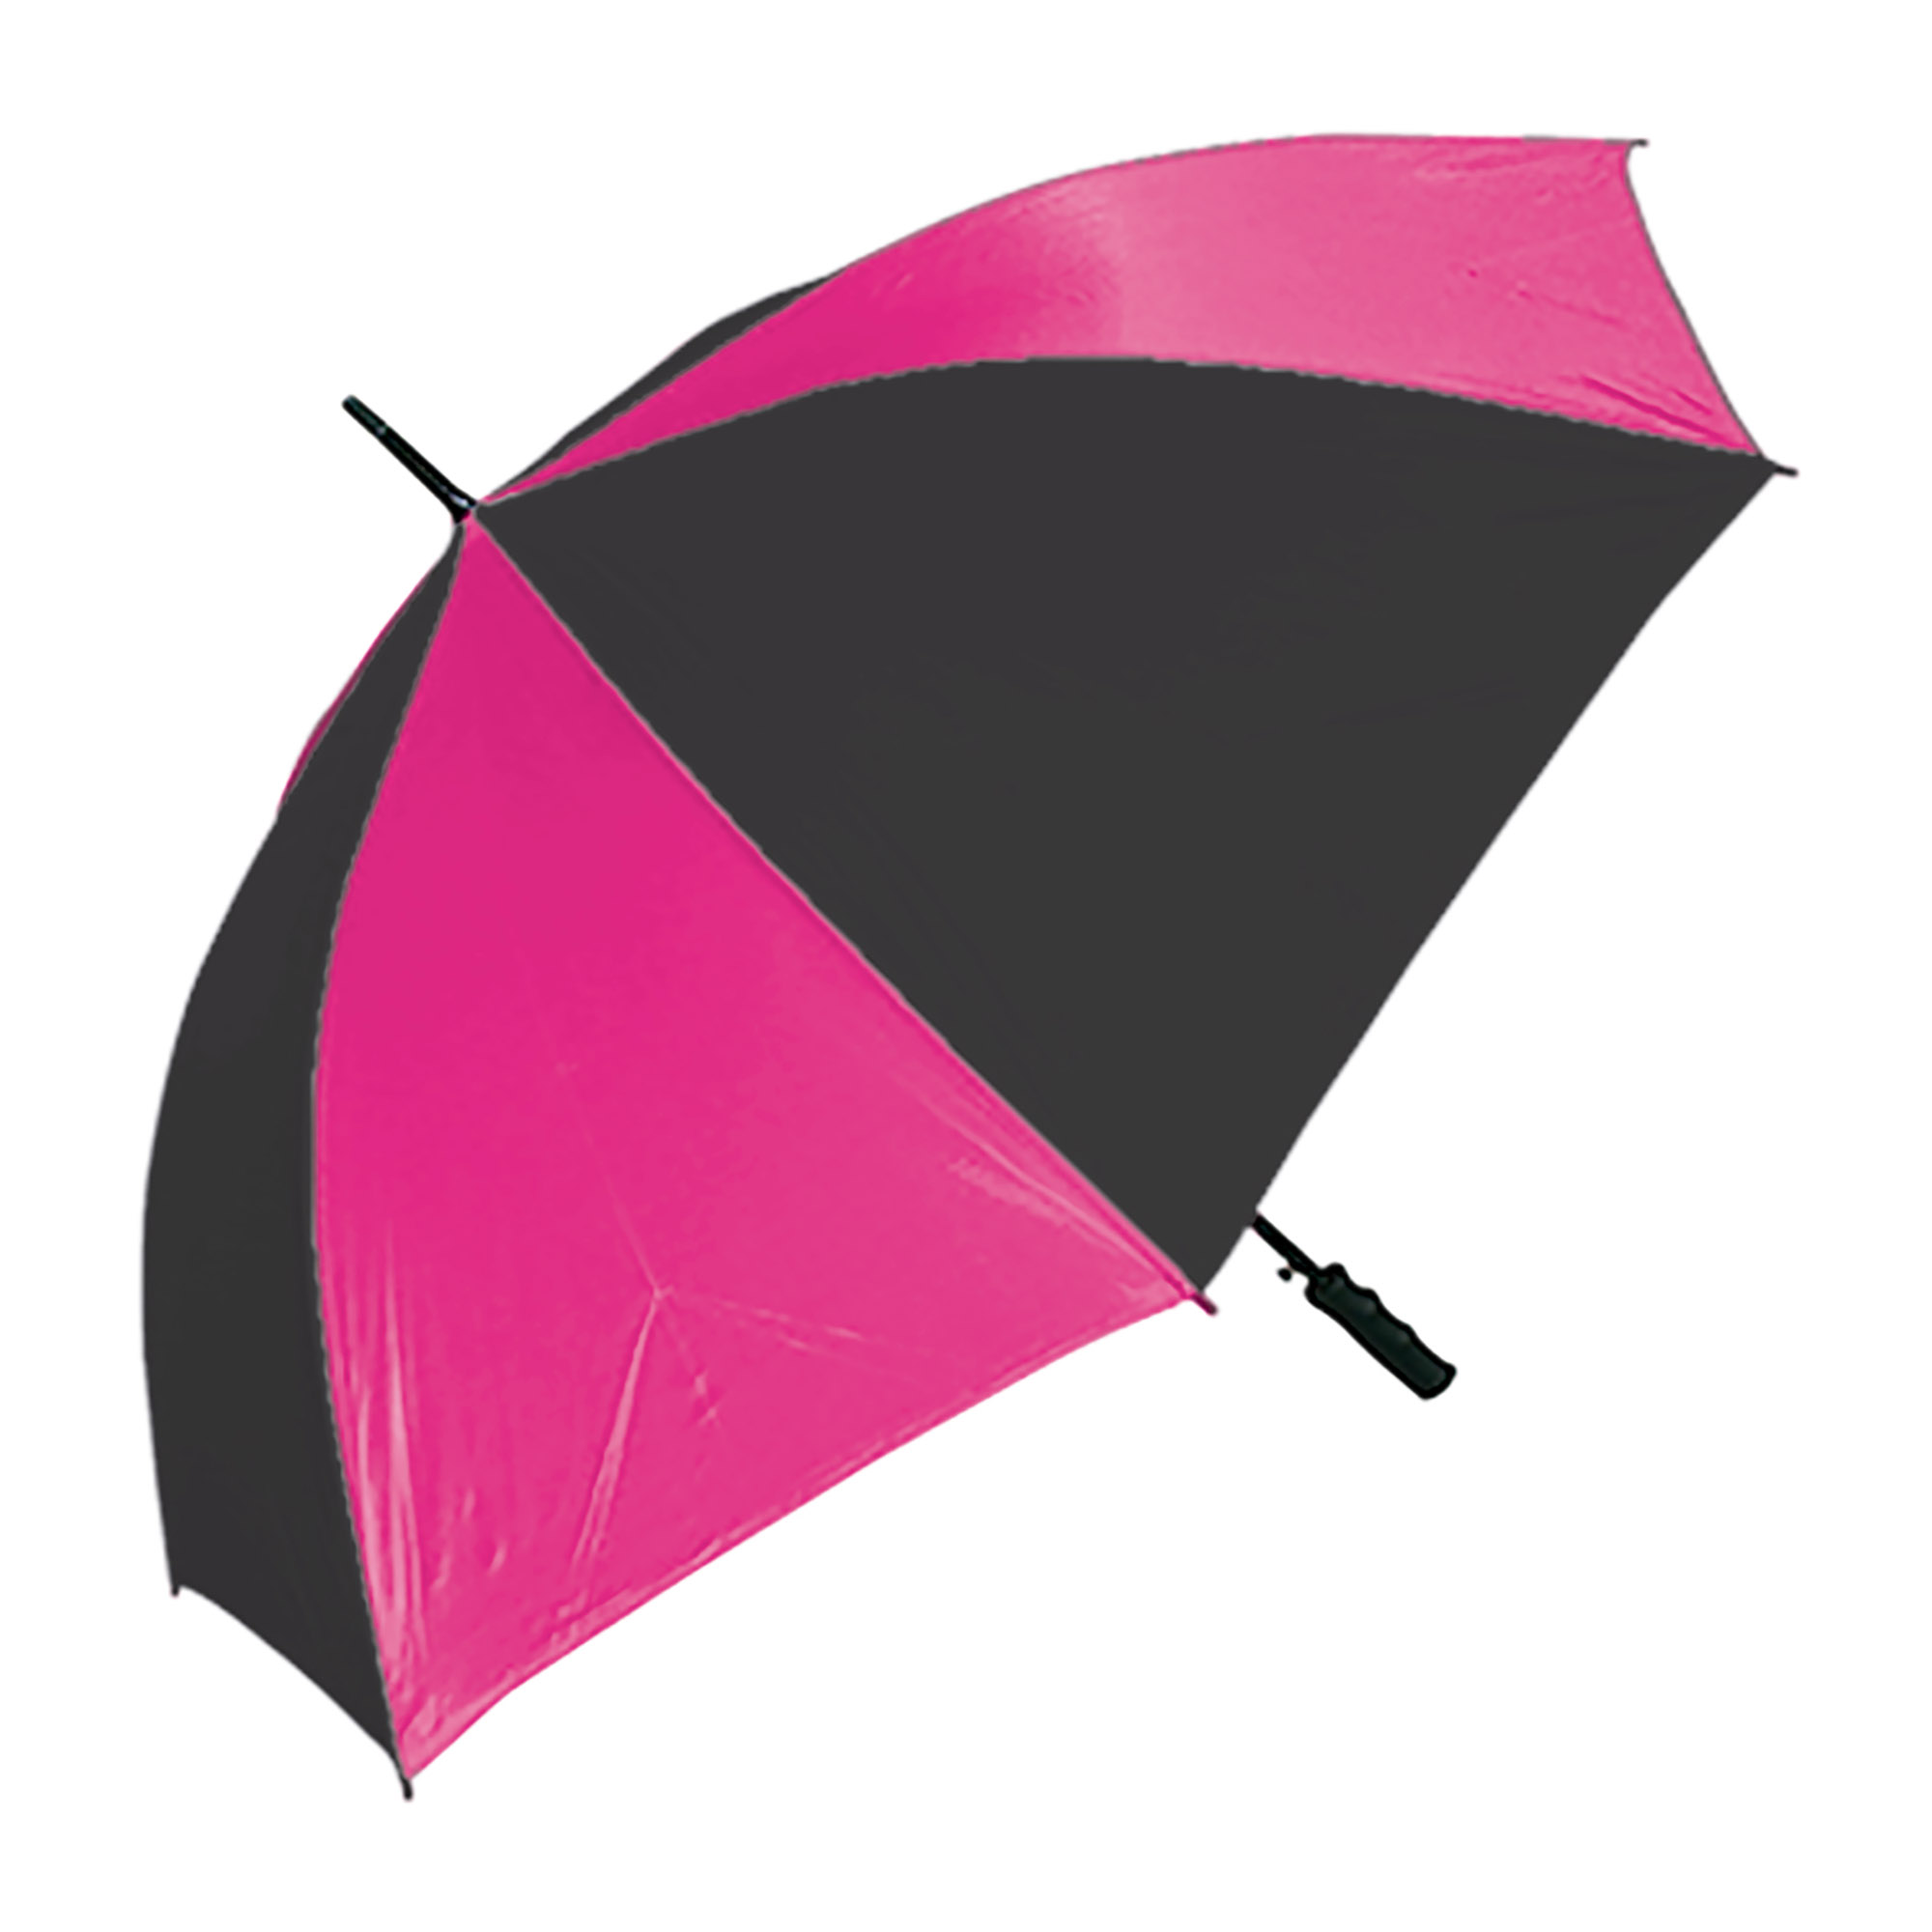 Bulk Promotional Pink And Black Sands Umbrella Online In Perth Australia